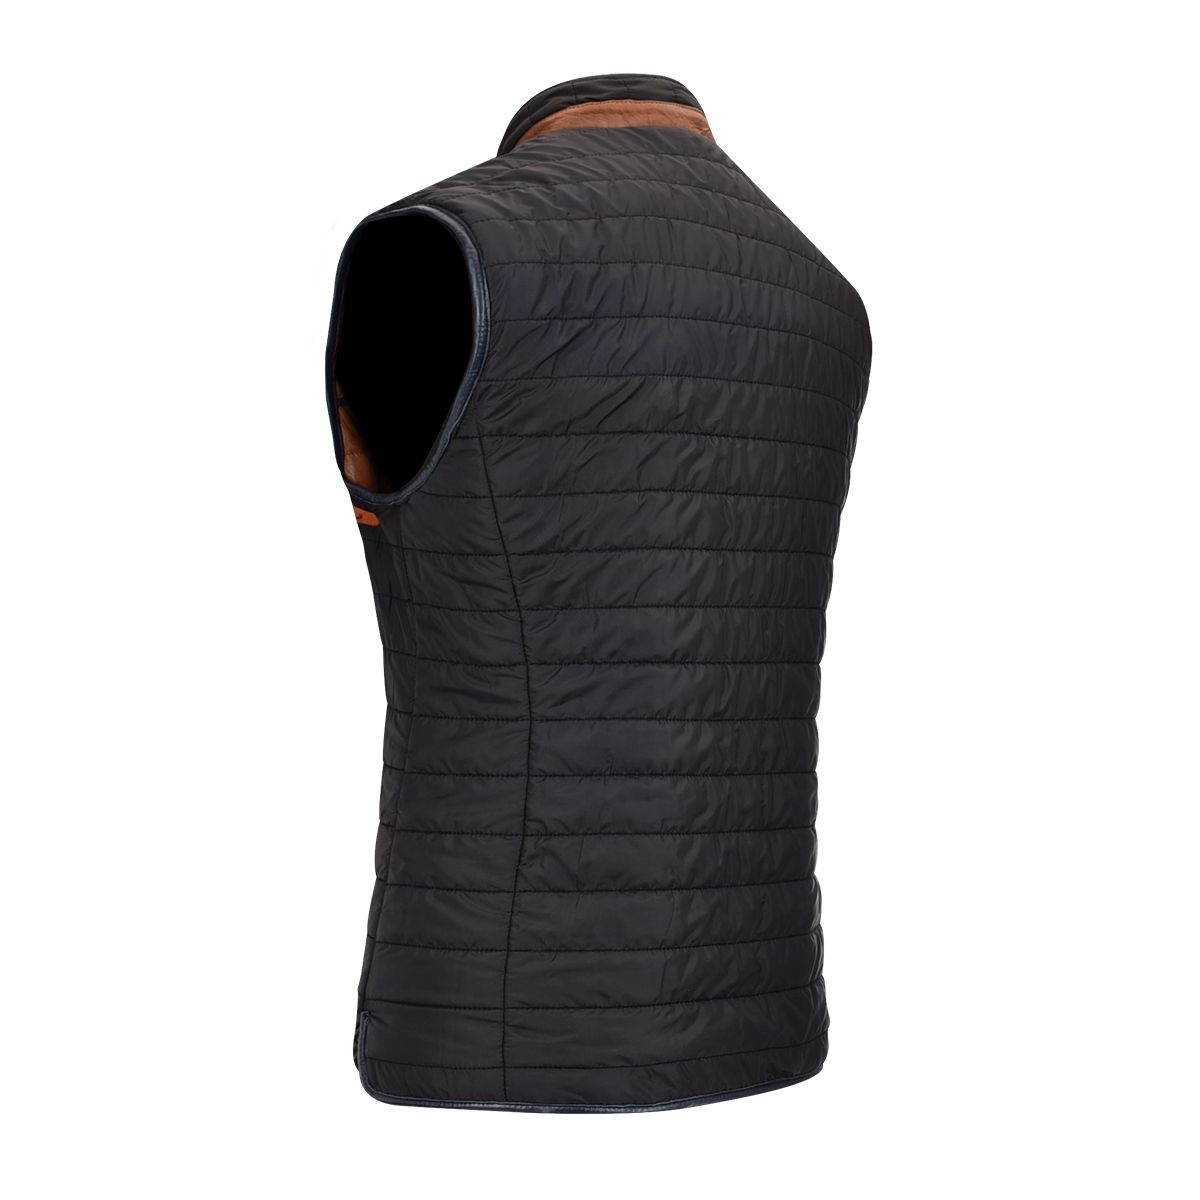 H278BOC - Cuadra brown casual fashion sheepskin leather reversible vest for men-Kuet.us